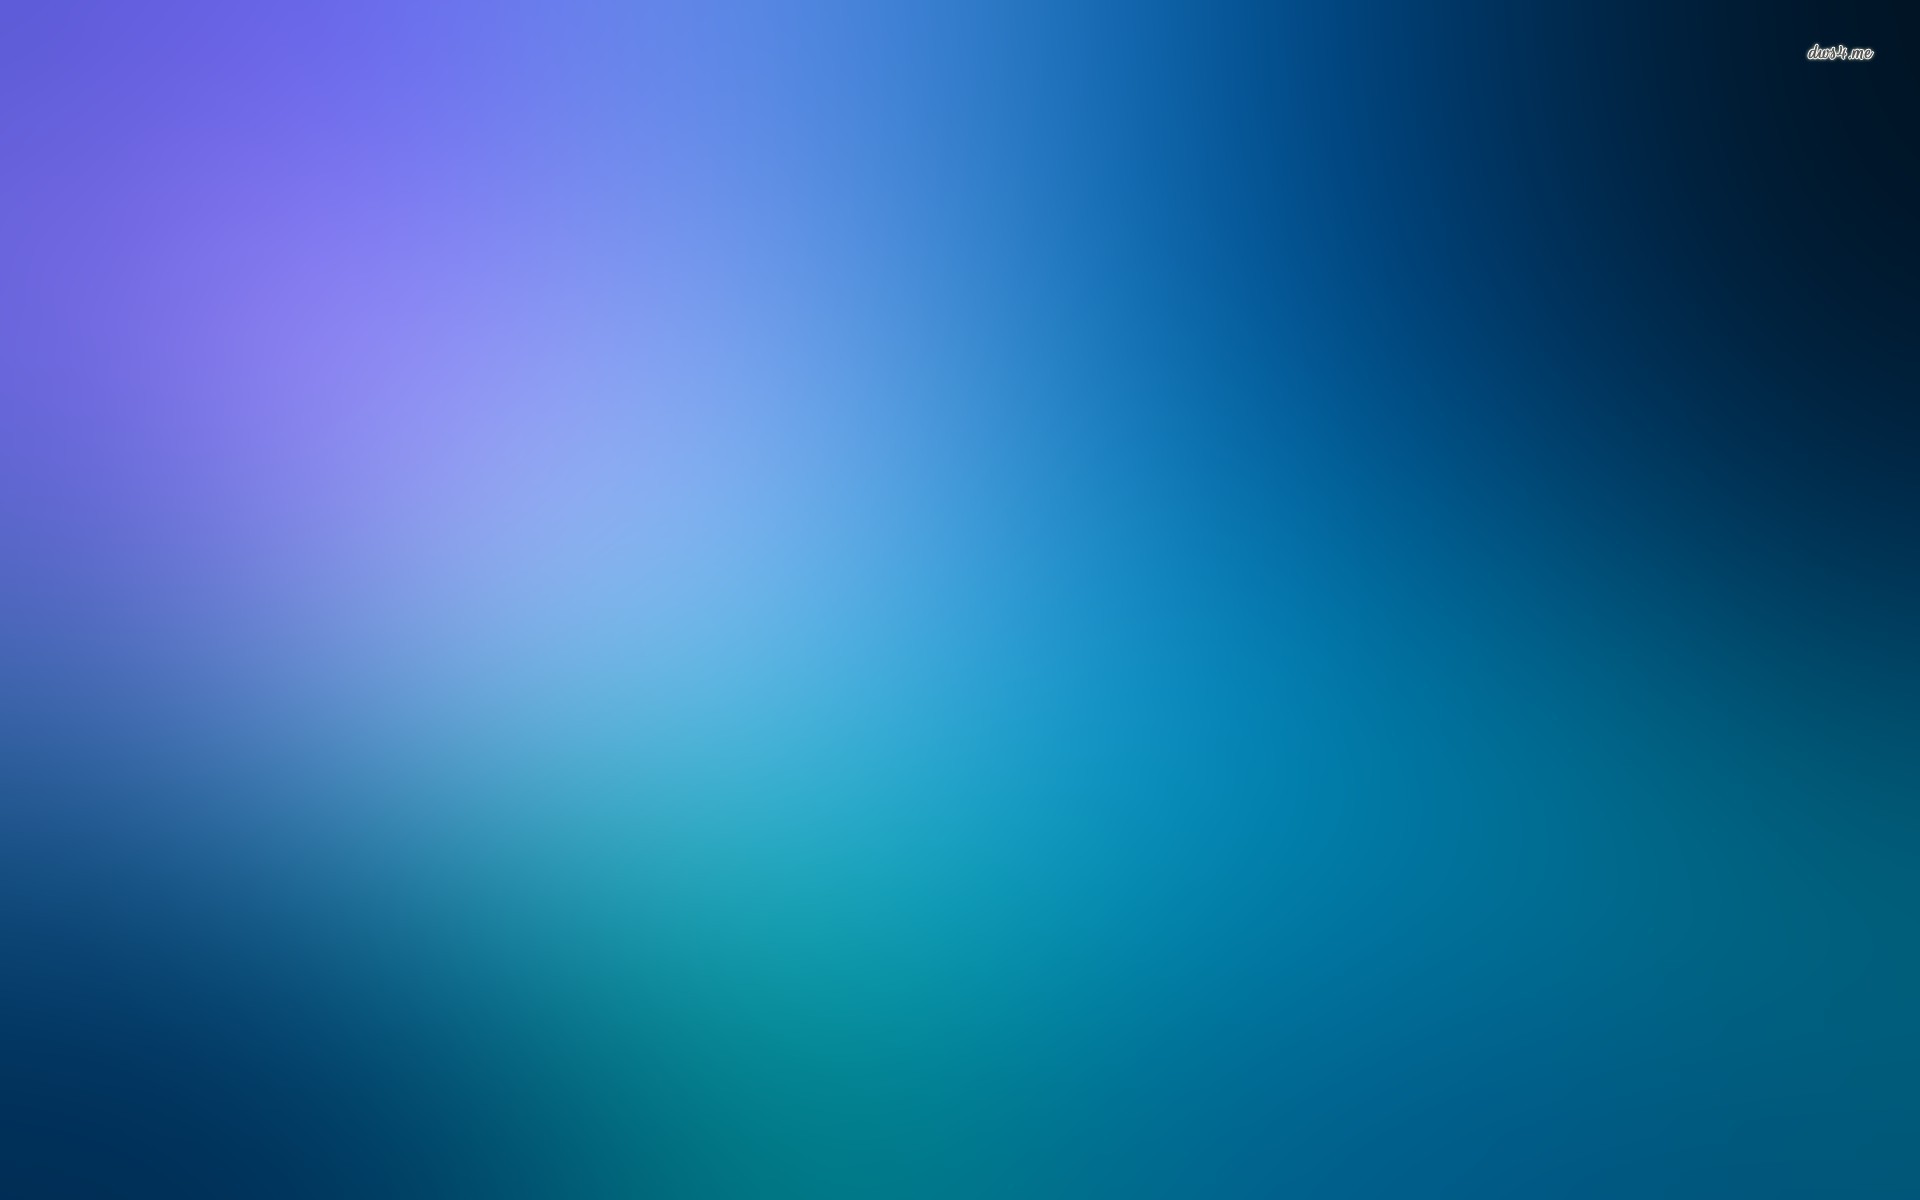 fond d'écran dégradé bleu,bleu,aqua,jour,bleu cobalt,turquoise